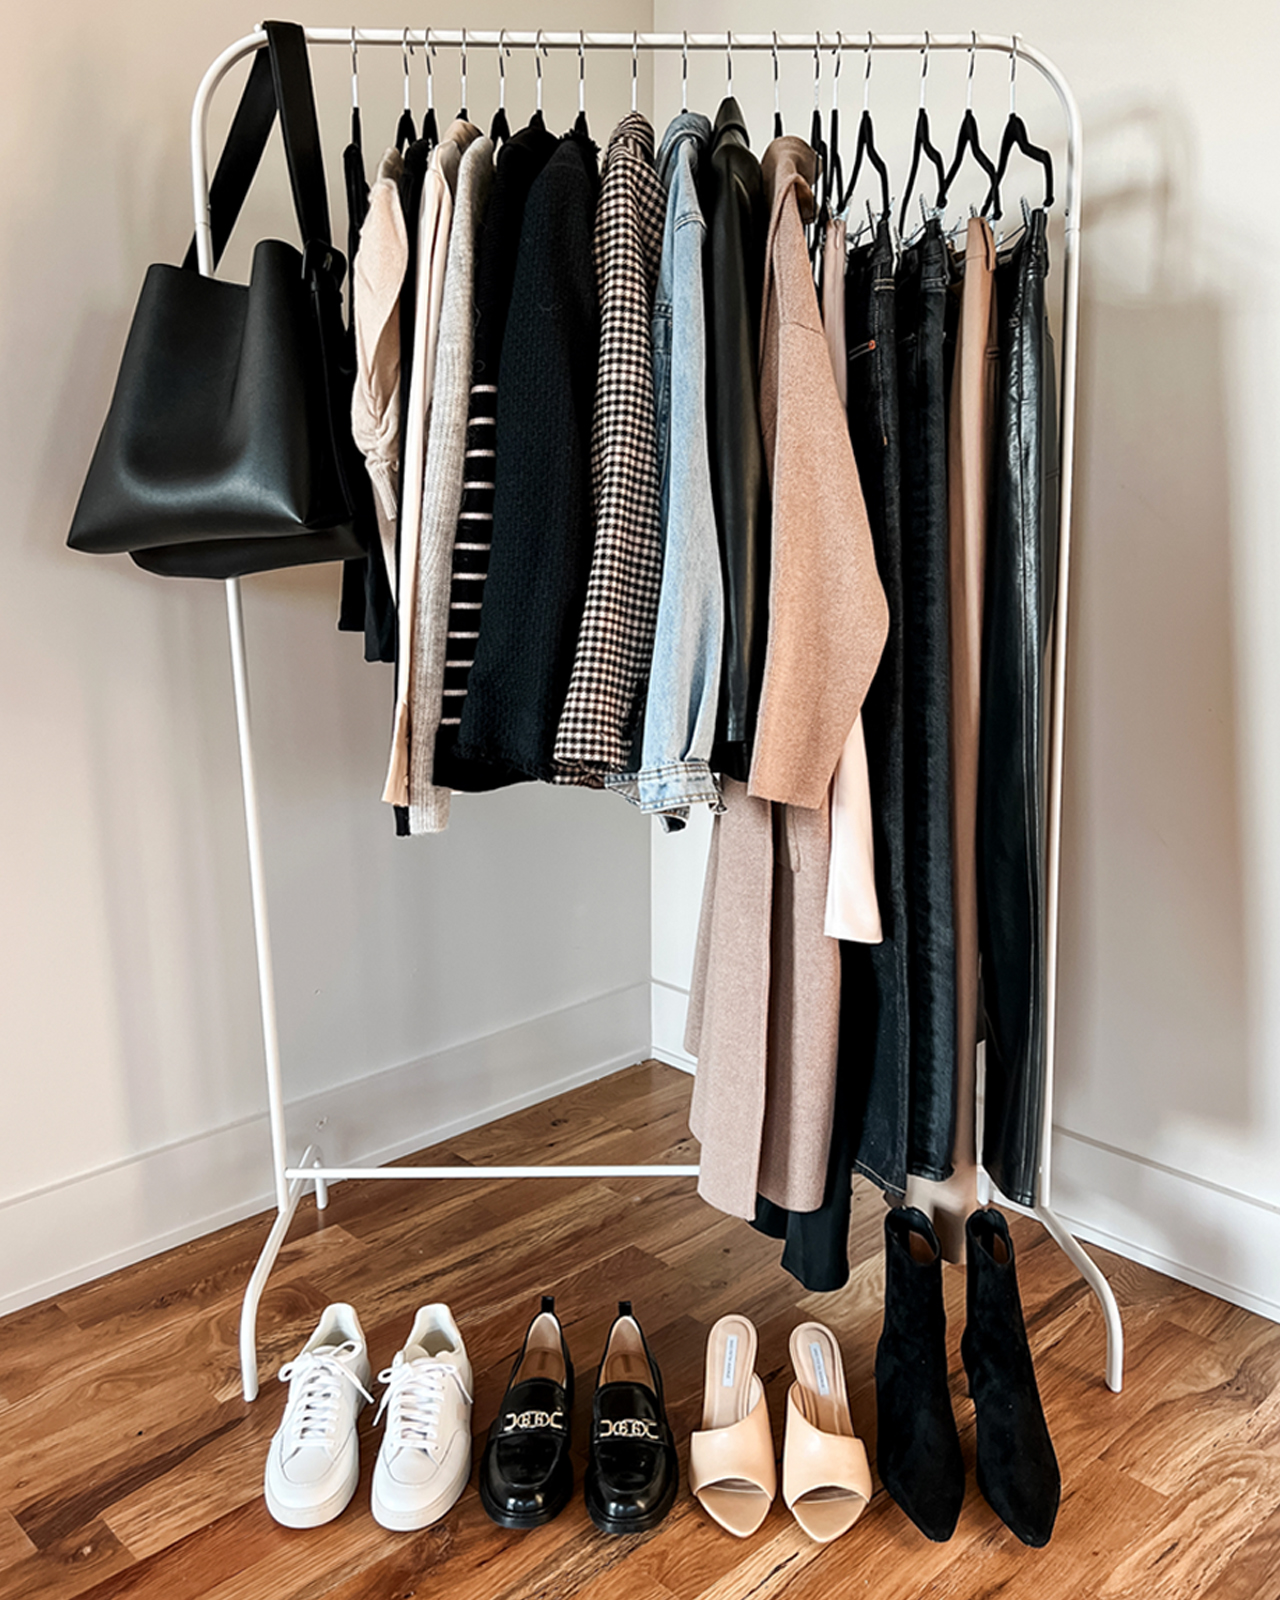 Liz  minimal outfits & workwear inspo on Instagram: All the